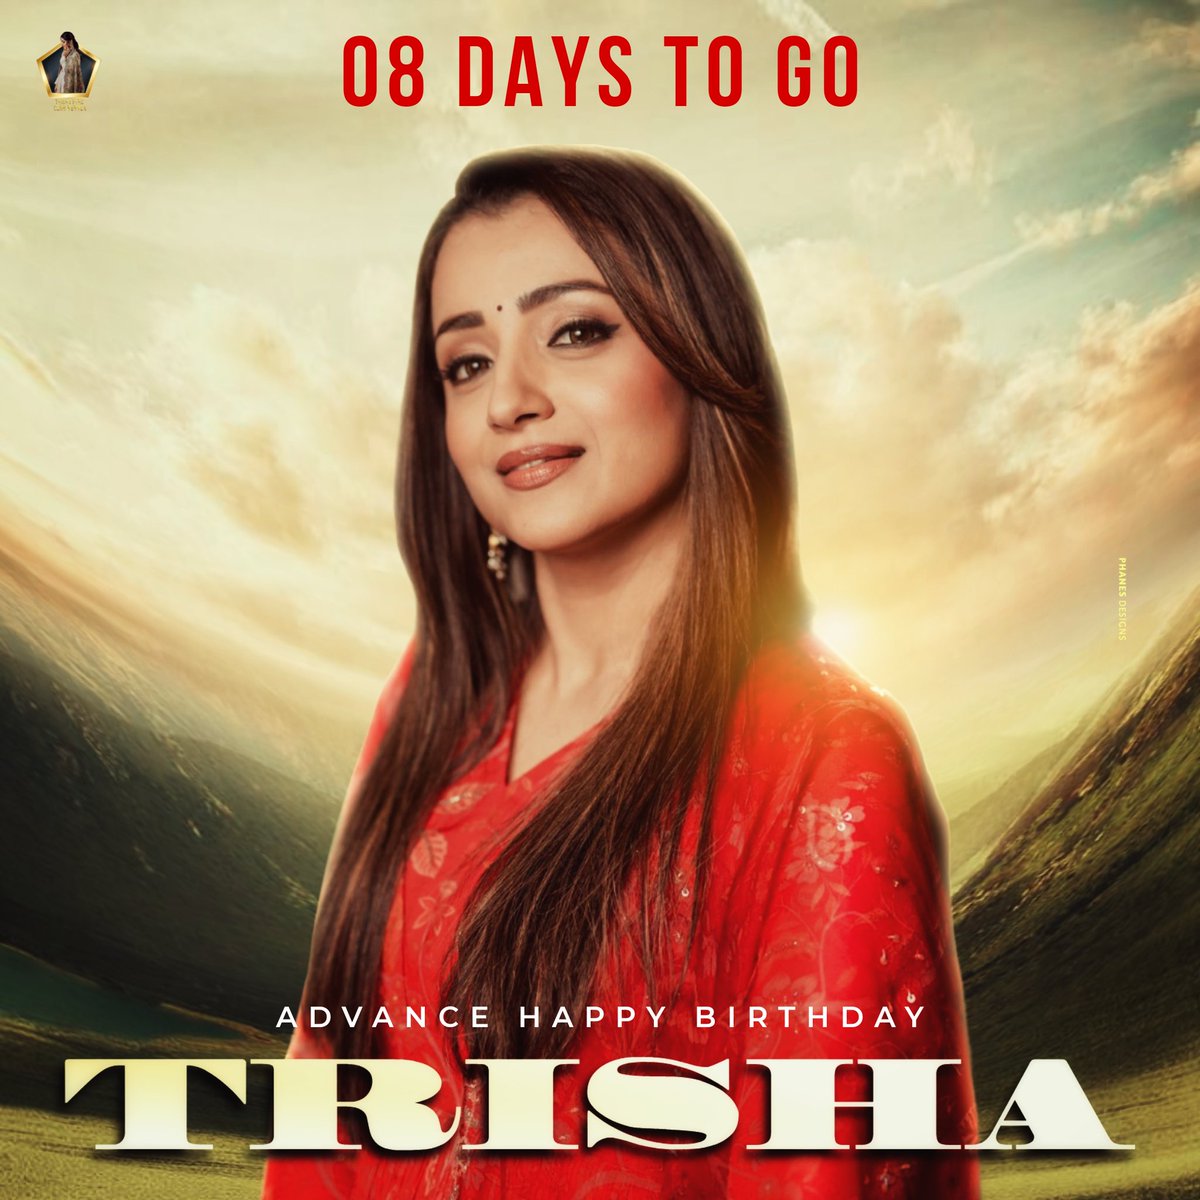 • 8 Days To Go #Thalaivi #SouthQueen @trishtrashers Bdy❤

@umakris31119674 @aditi1231 @ActressTrisha  

 #Trisha #TrishaKrishnan  #SouthQueenTrisha #TrishaFansKerala #Trishaism #Trishians